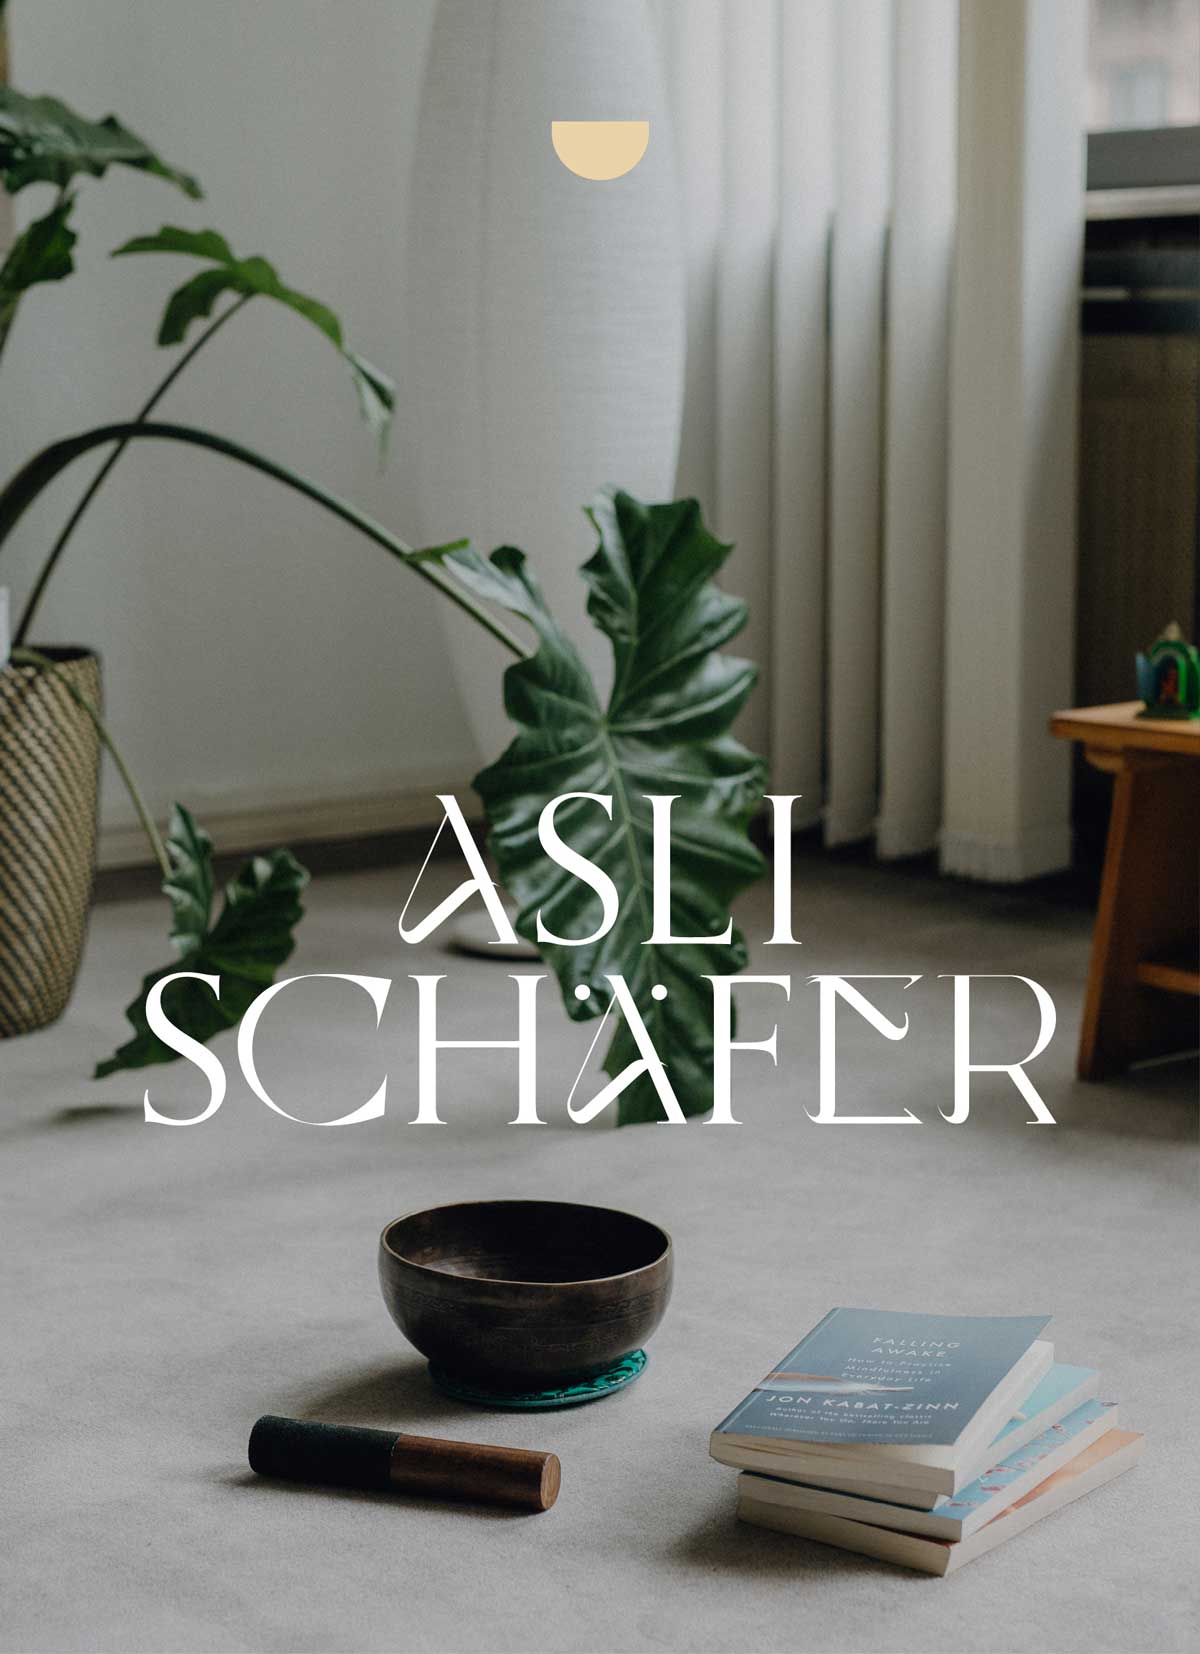 Asli Schaefer MBSR Lehrerin Branding by Mindt Design Studio